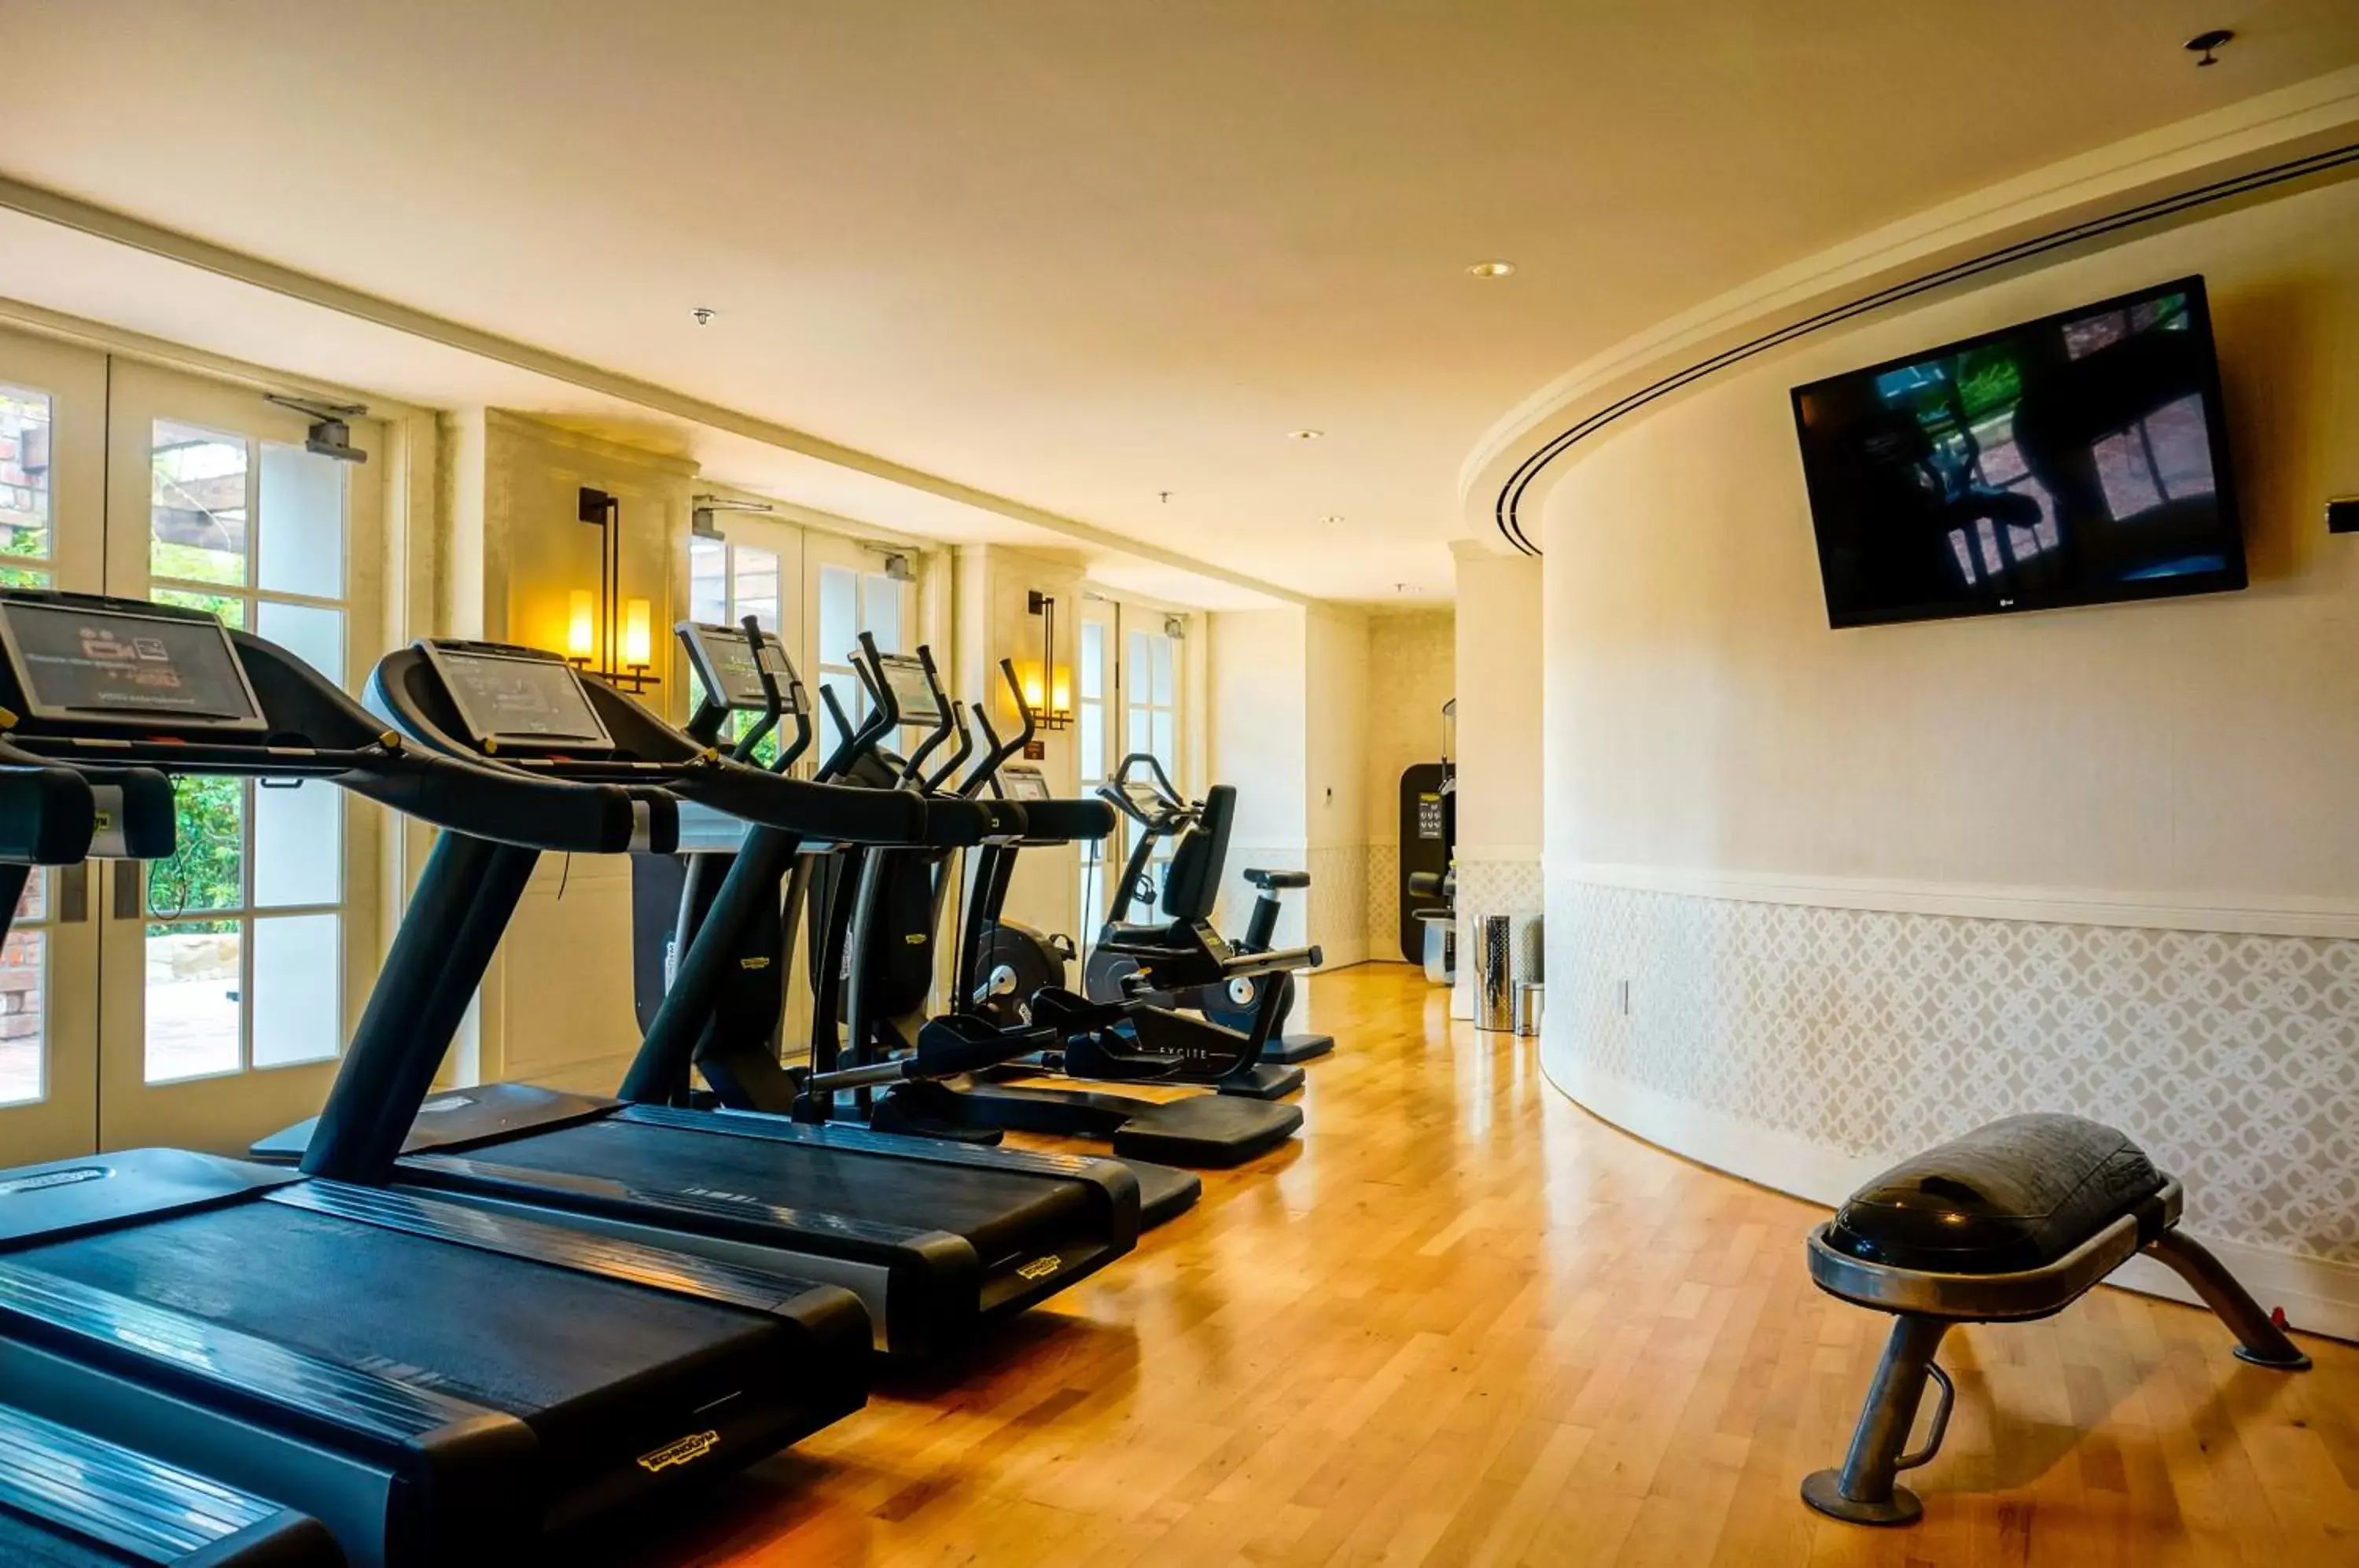 Fitness centre/facilities, Fitness Center/Facilities in El Encanto, A Belmond Hotel, Santa Barbara